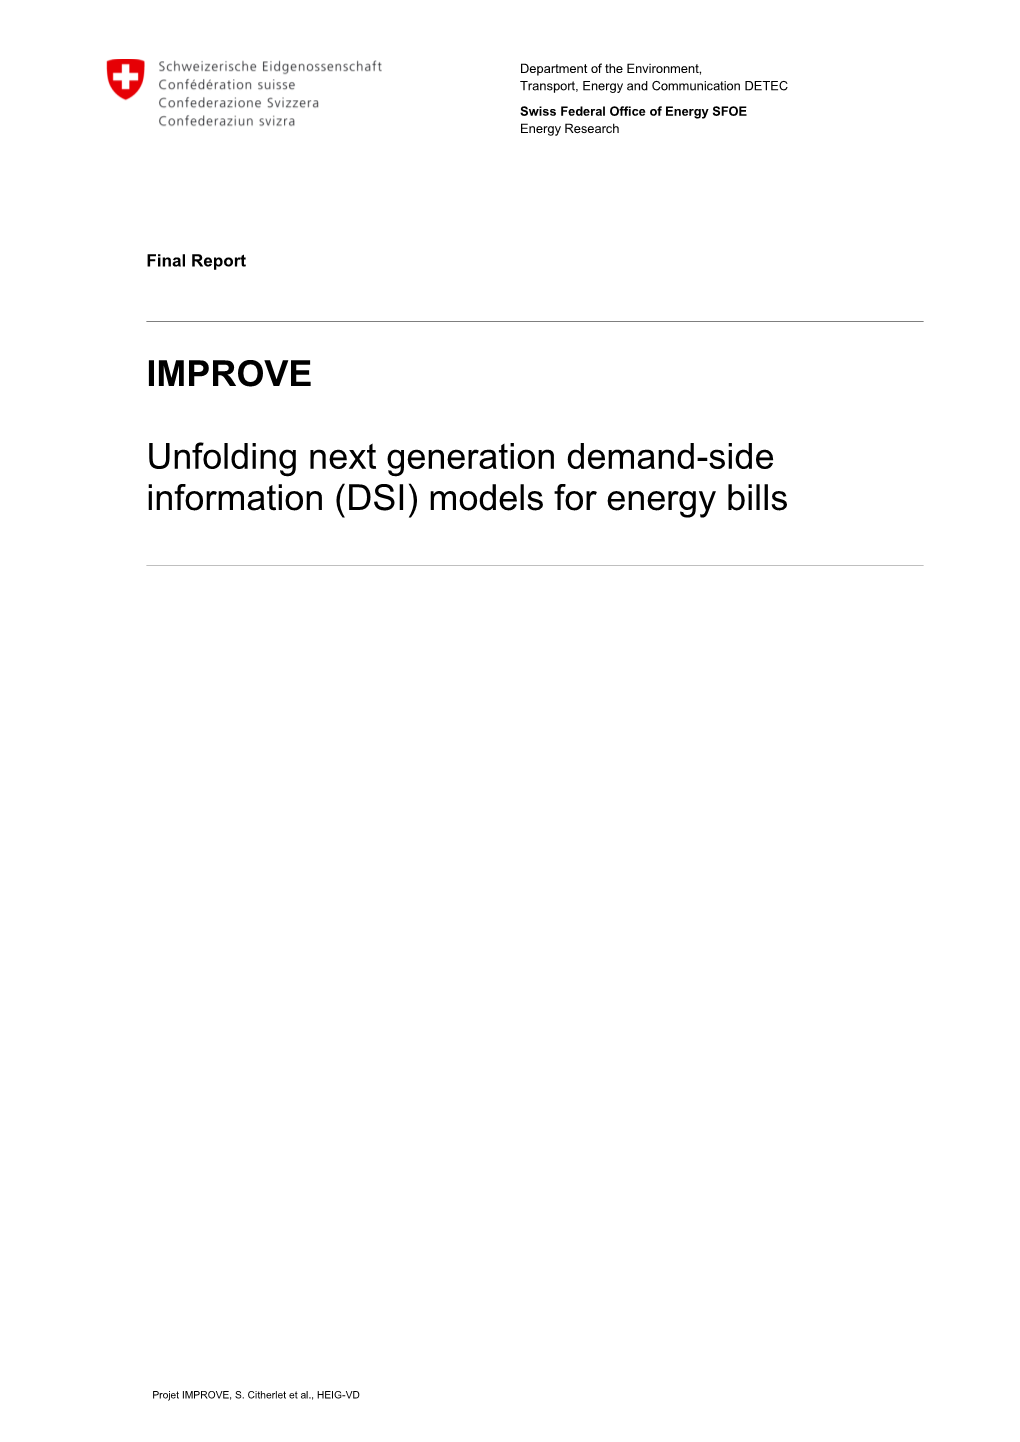 IMPROVE Unfolding Next Generation Demand-Side Information (DSI)